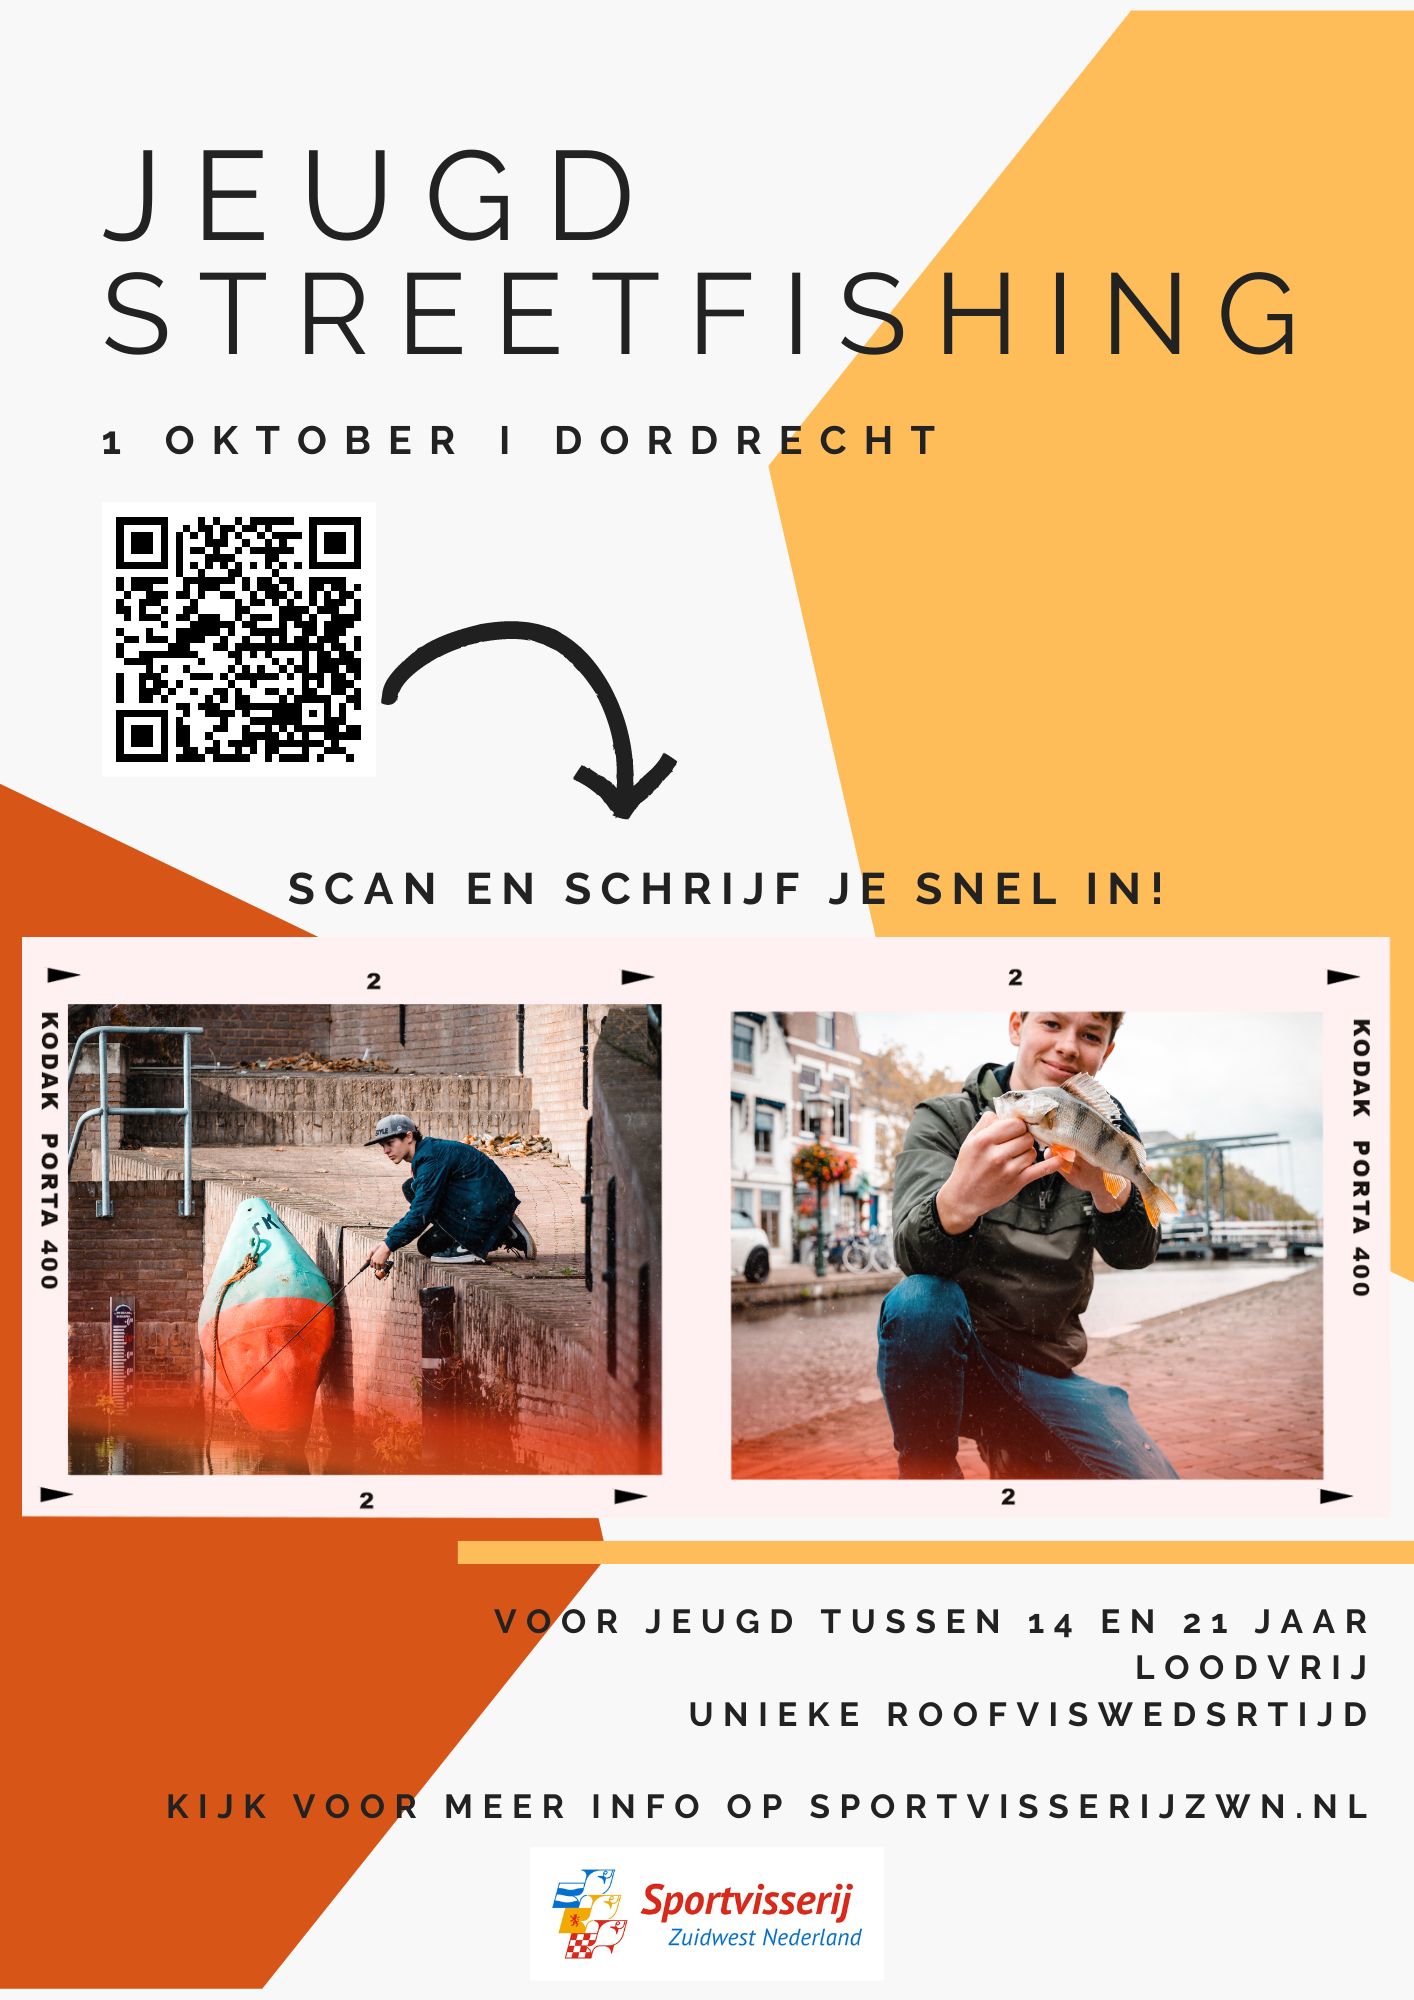 FK jeugd streetfishing